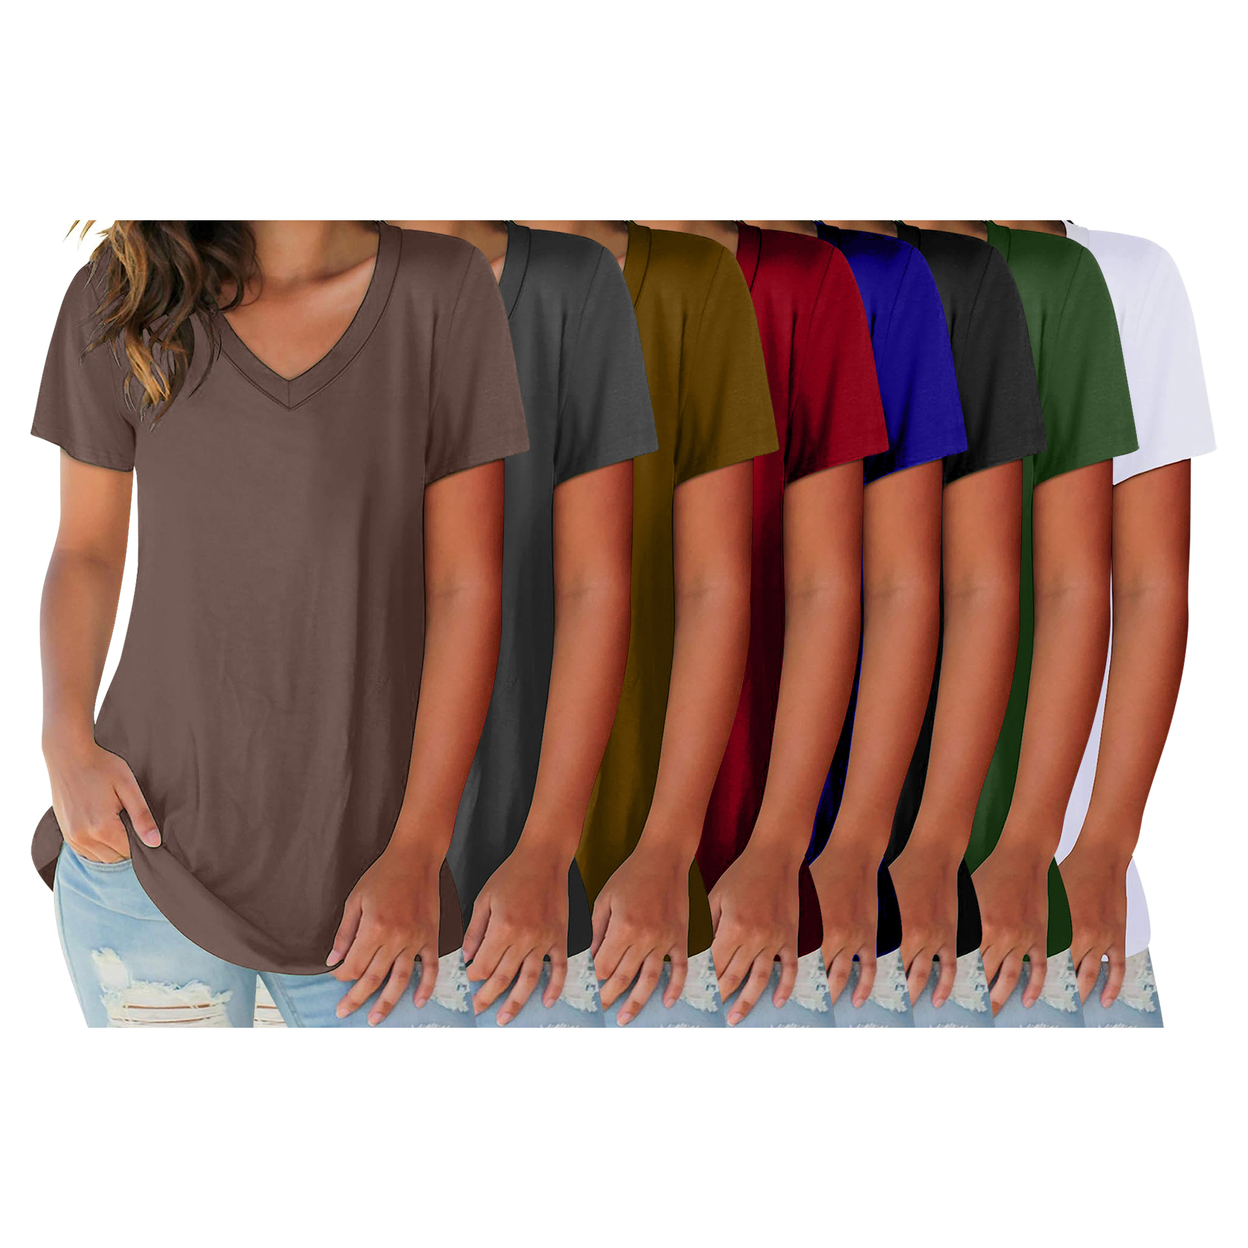 2-Pack: Women's Ultra Soft Smooth Cotton Blend Basic V-Neck Short Sleeve Shirts - Navy & Mustard, Large